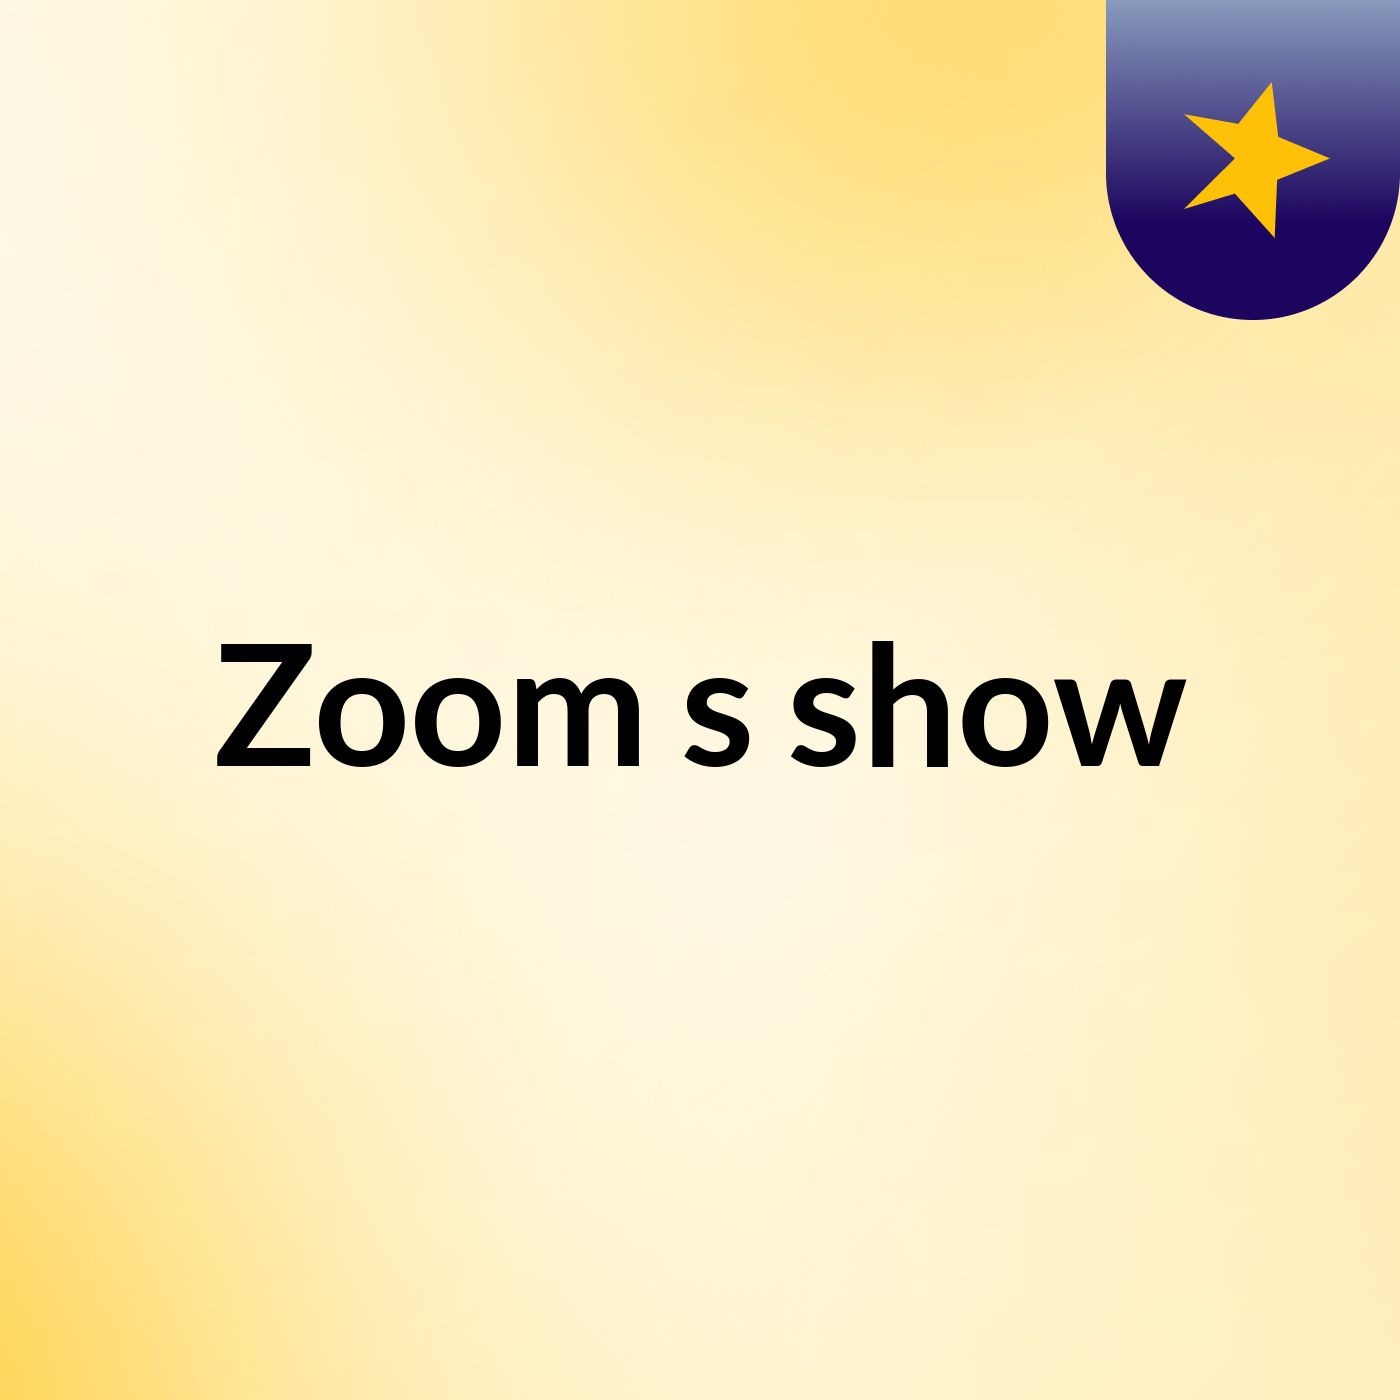 Zoom's show